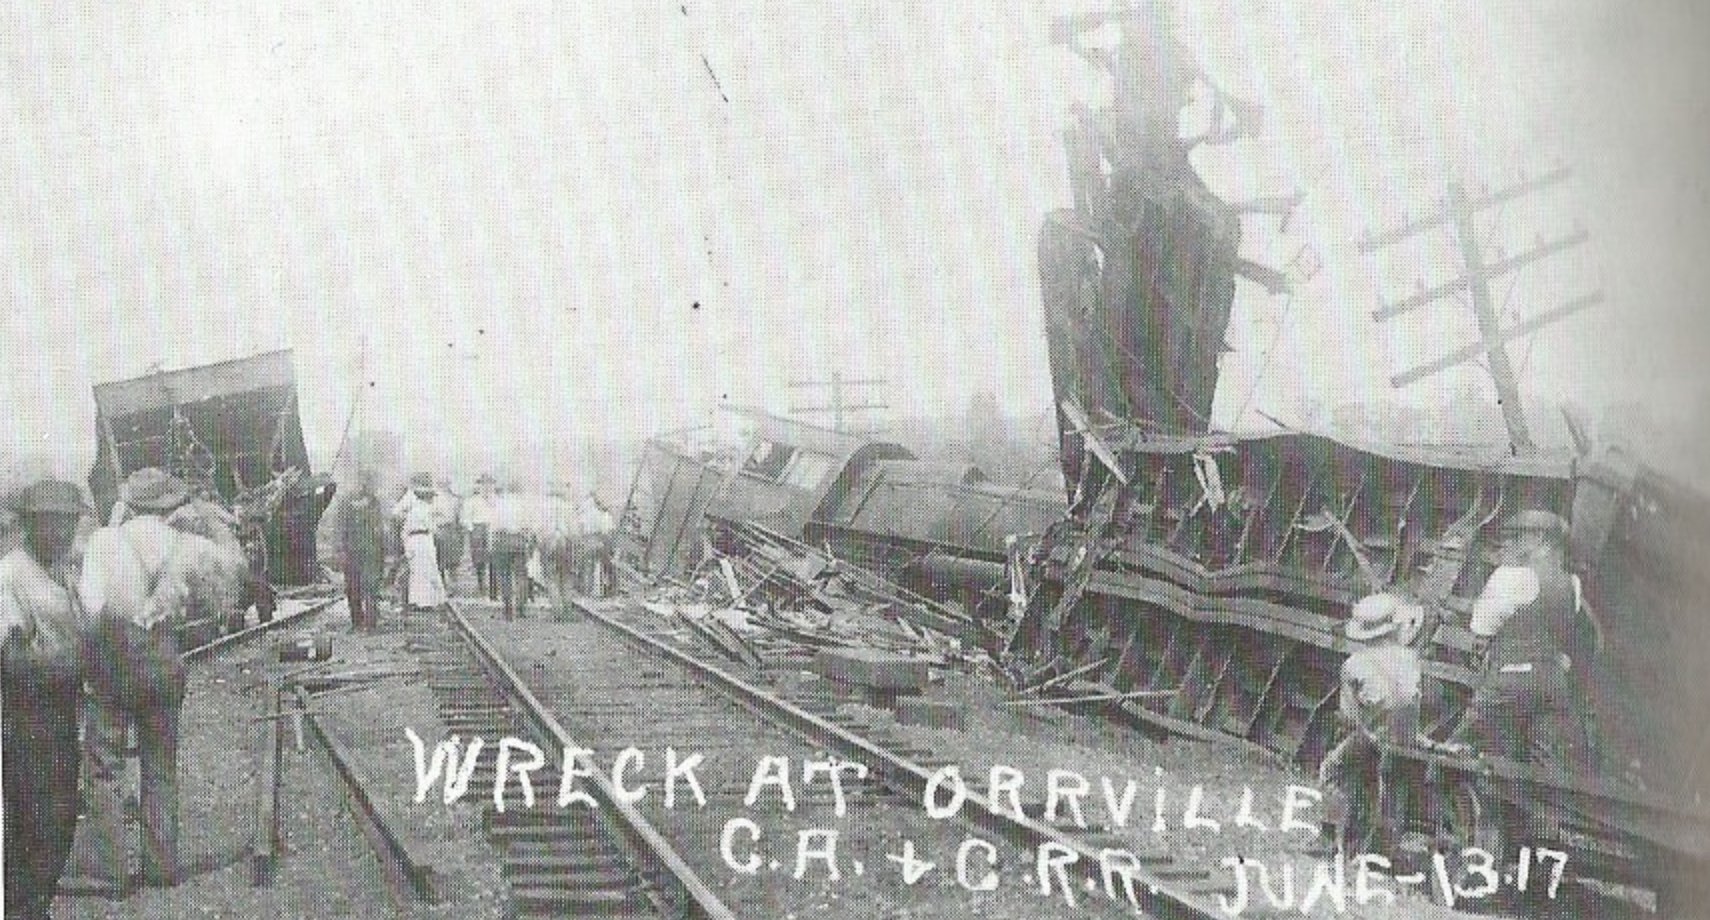 photo of train crash in orville